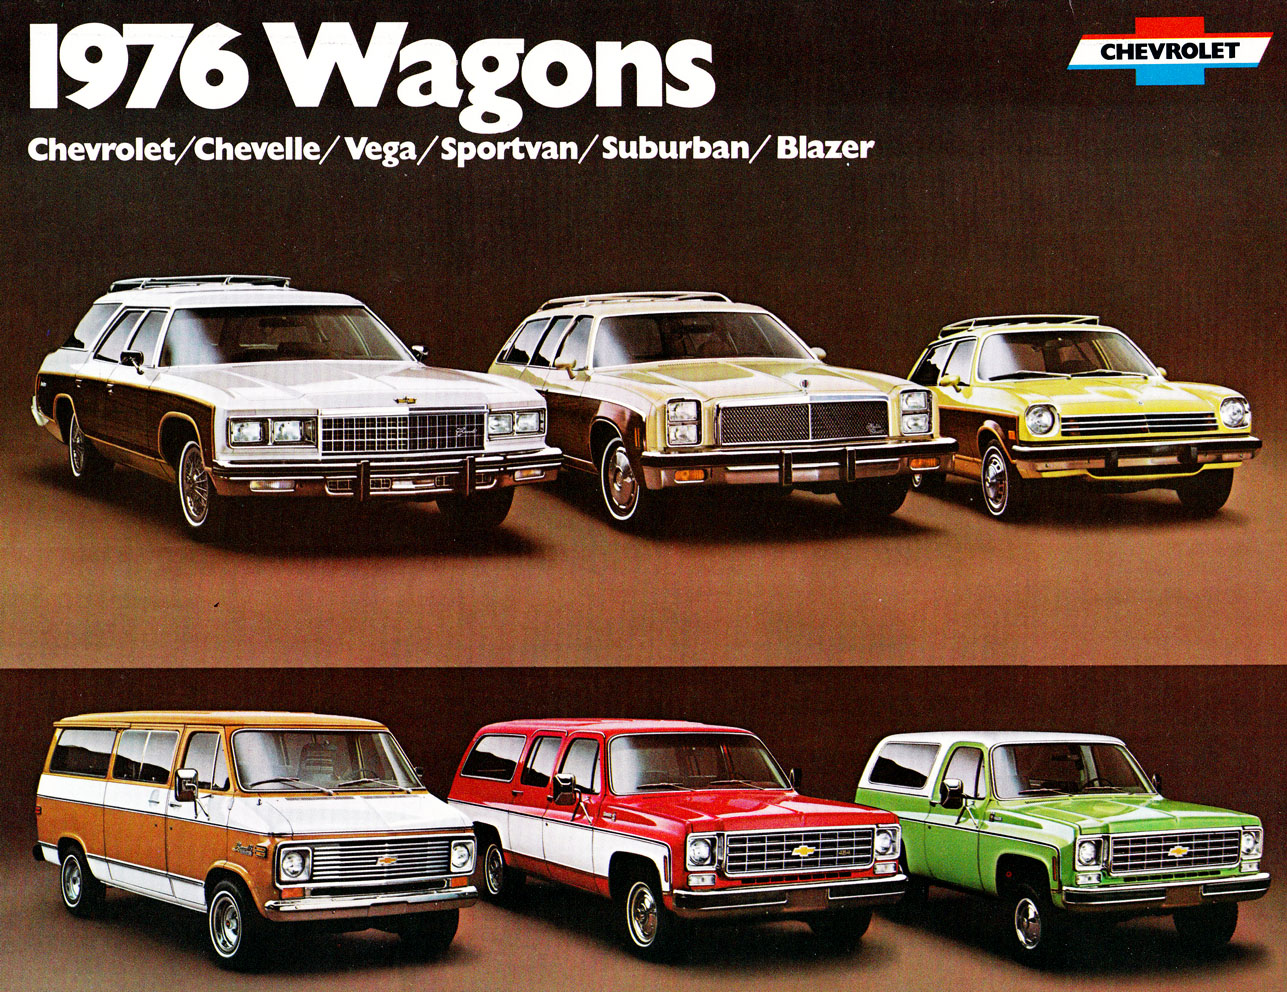 1976 Chevrolet Wagons-01